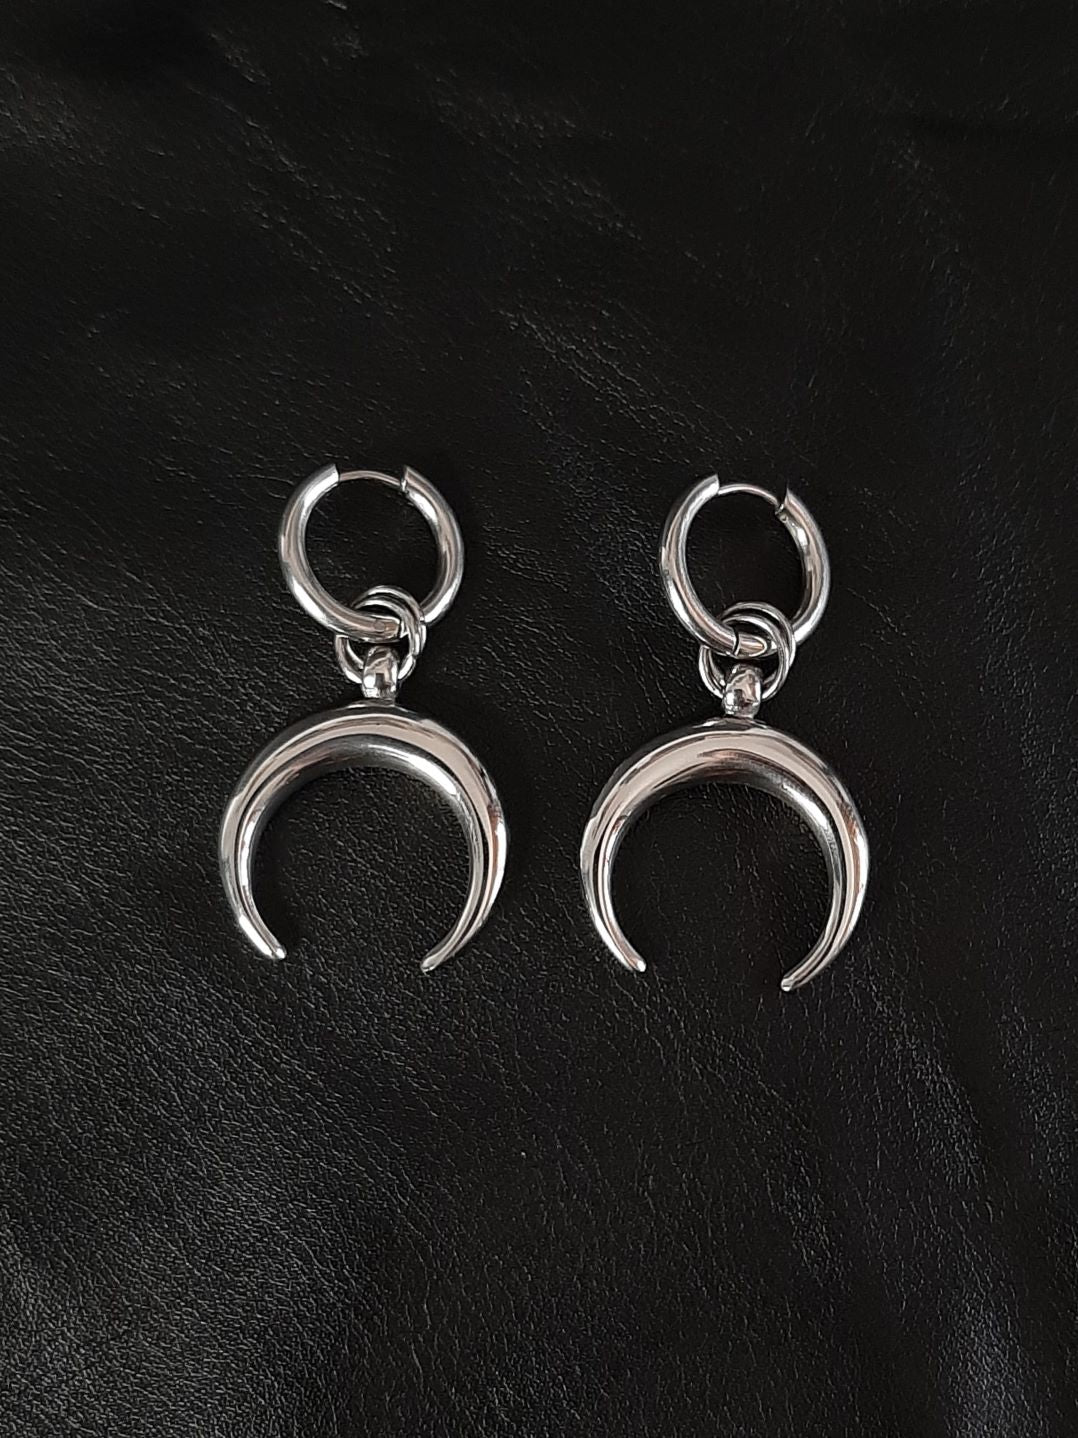 ECLIPSE - Moon crescent earrings